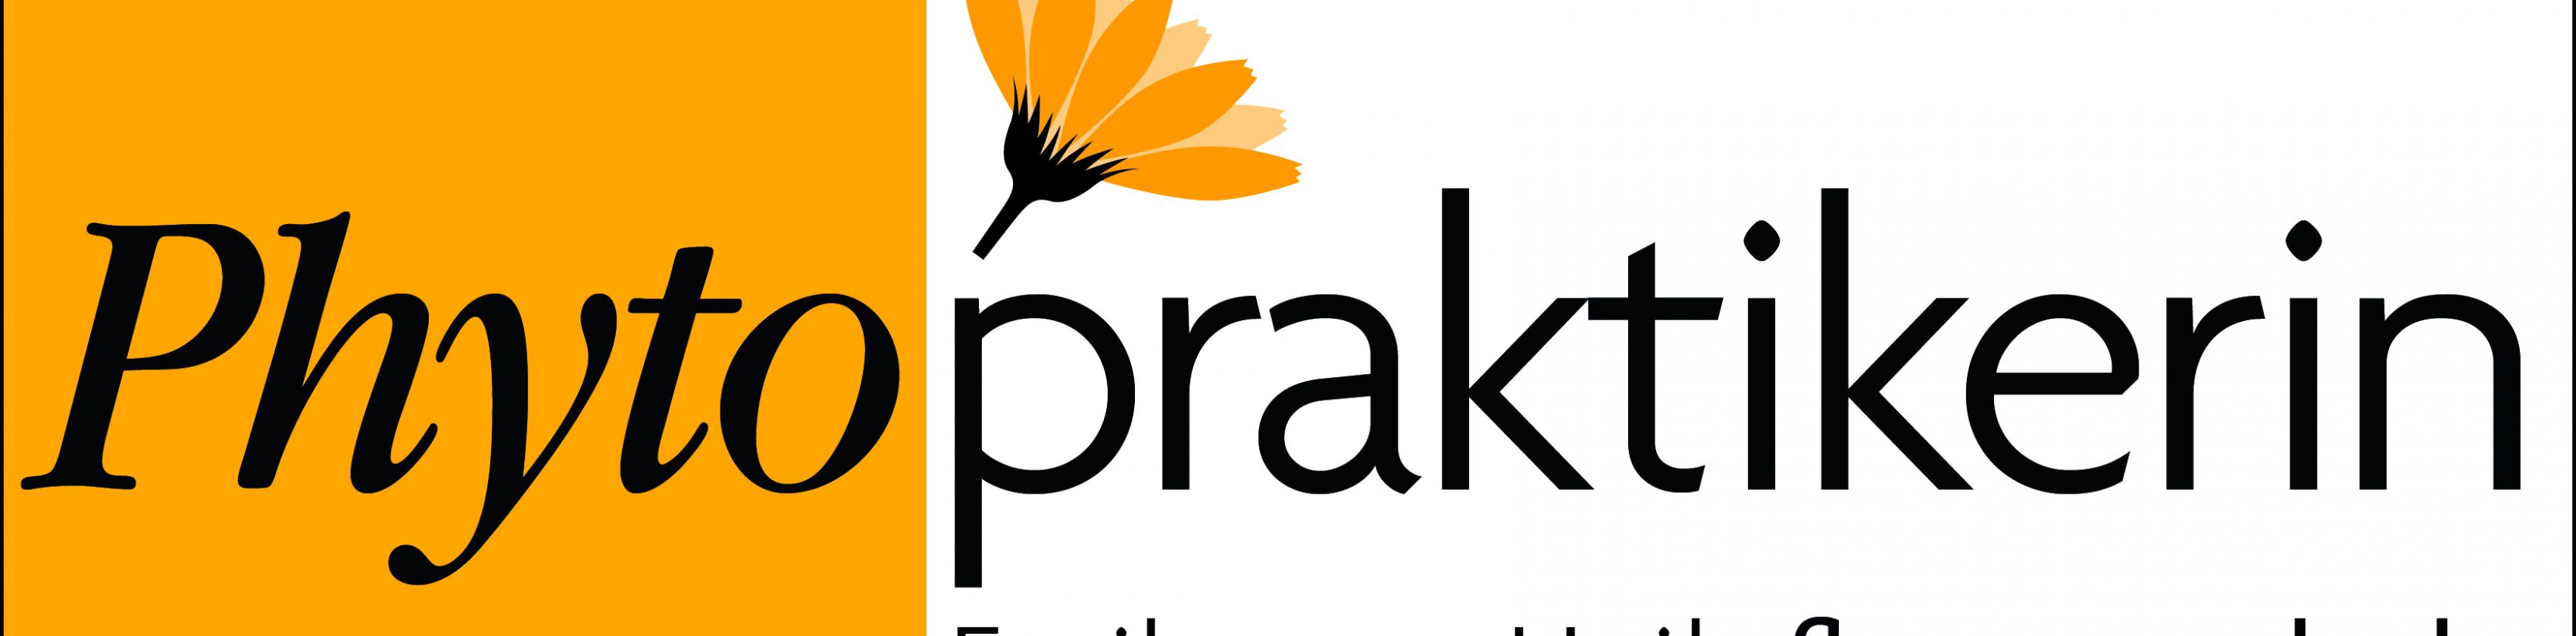 Phytopraktikerin_Logo